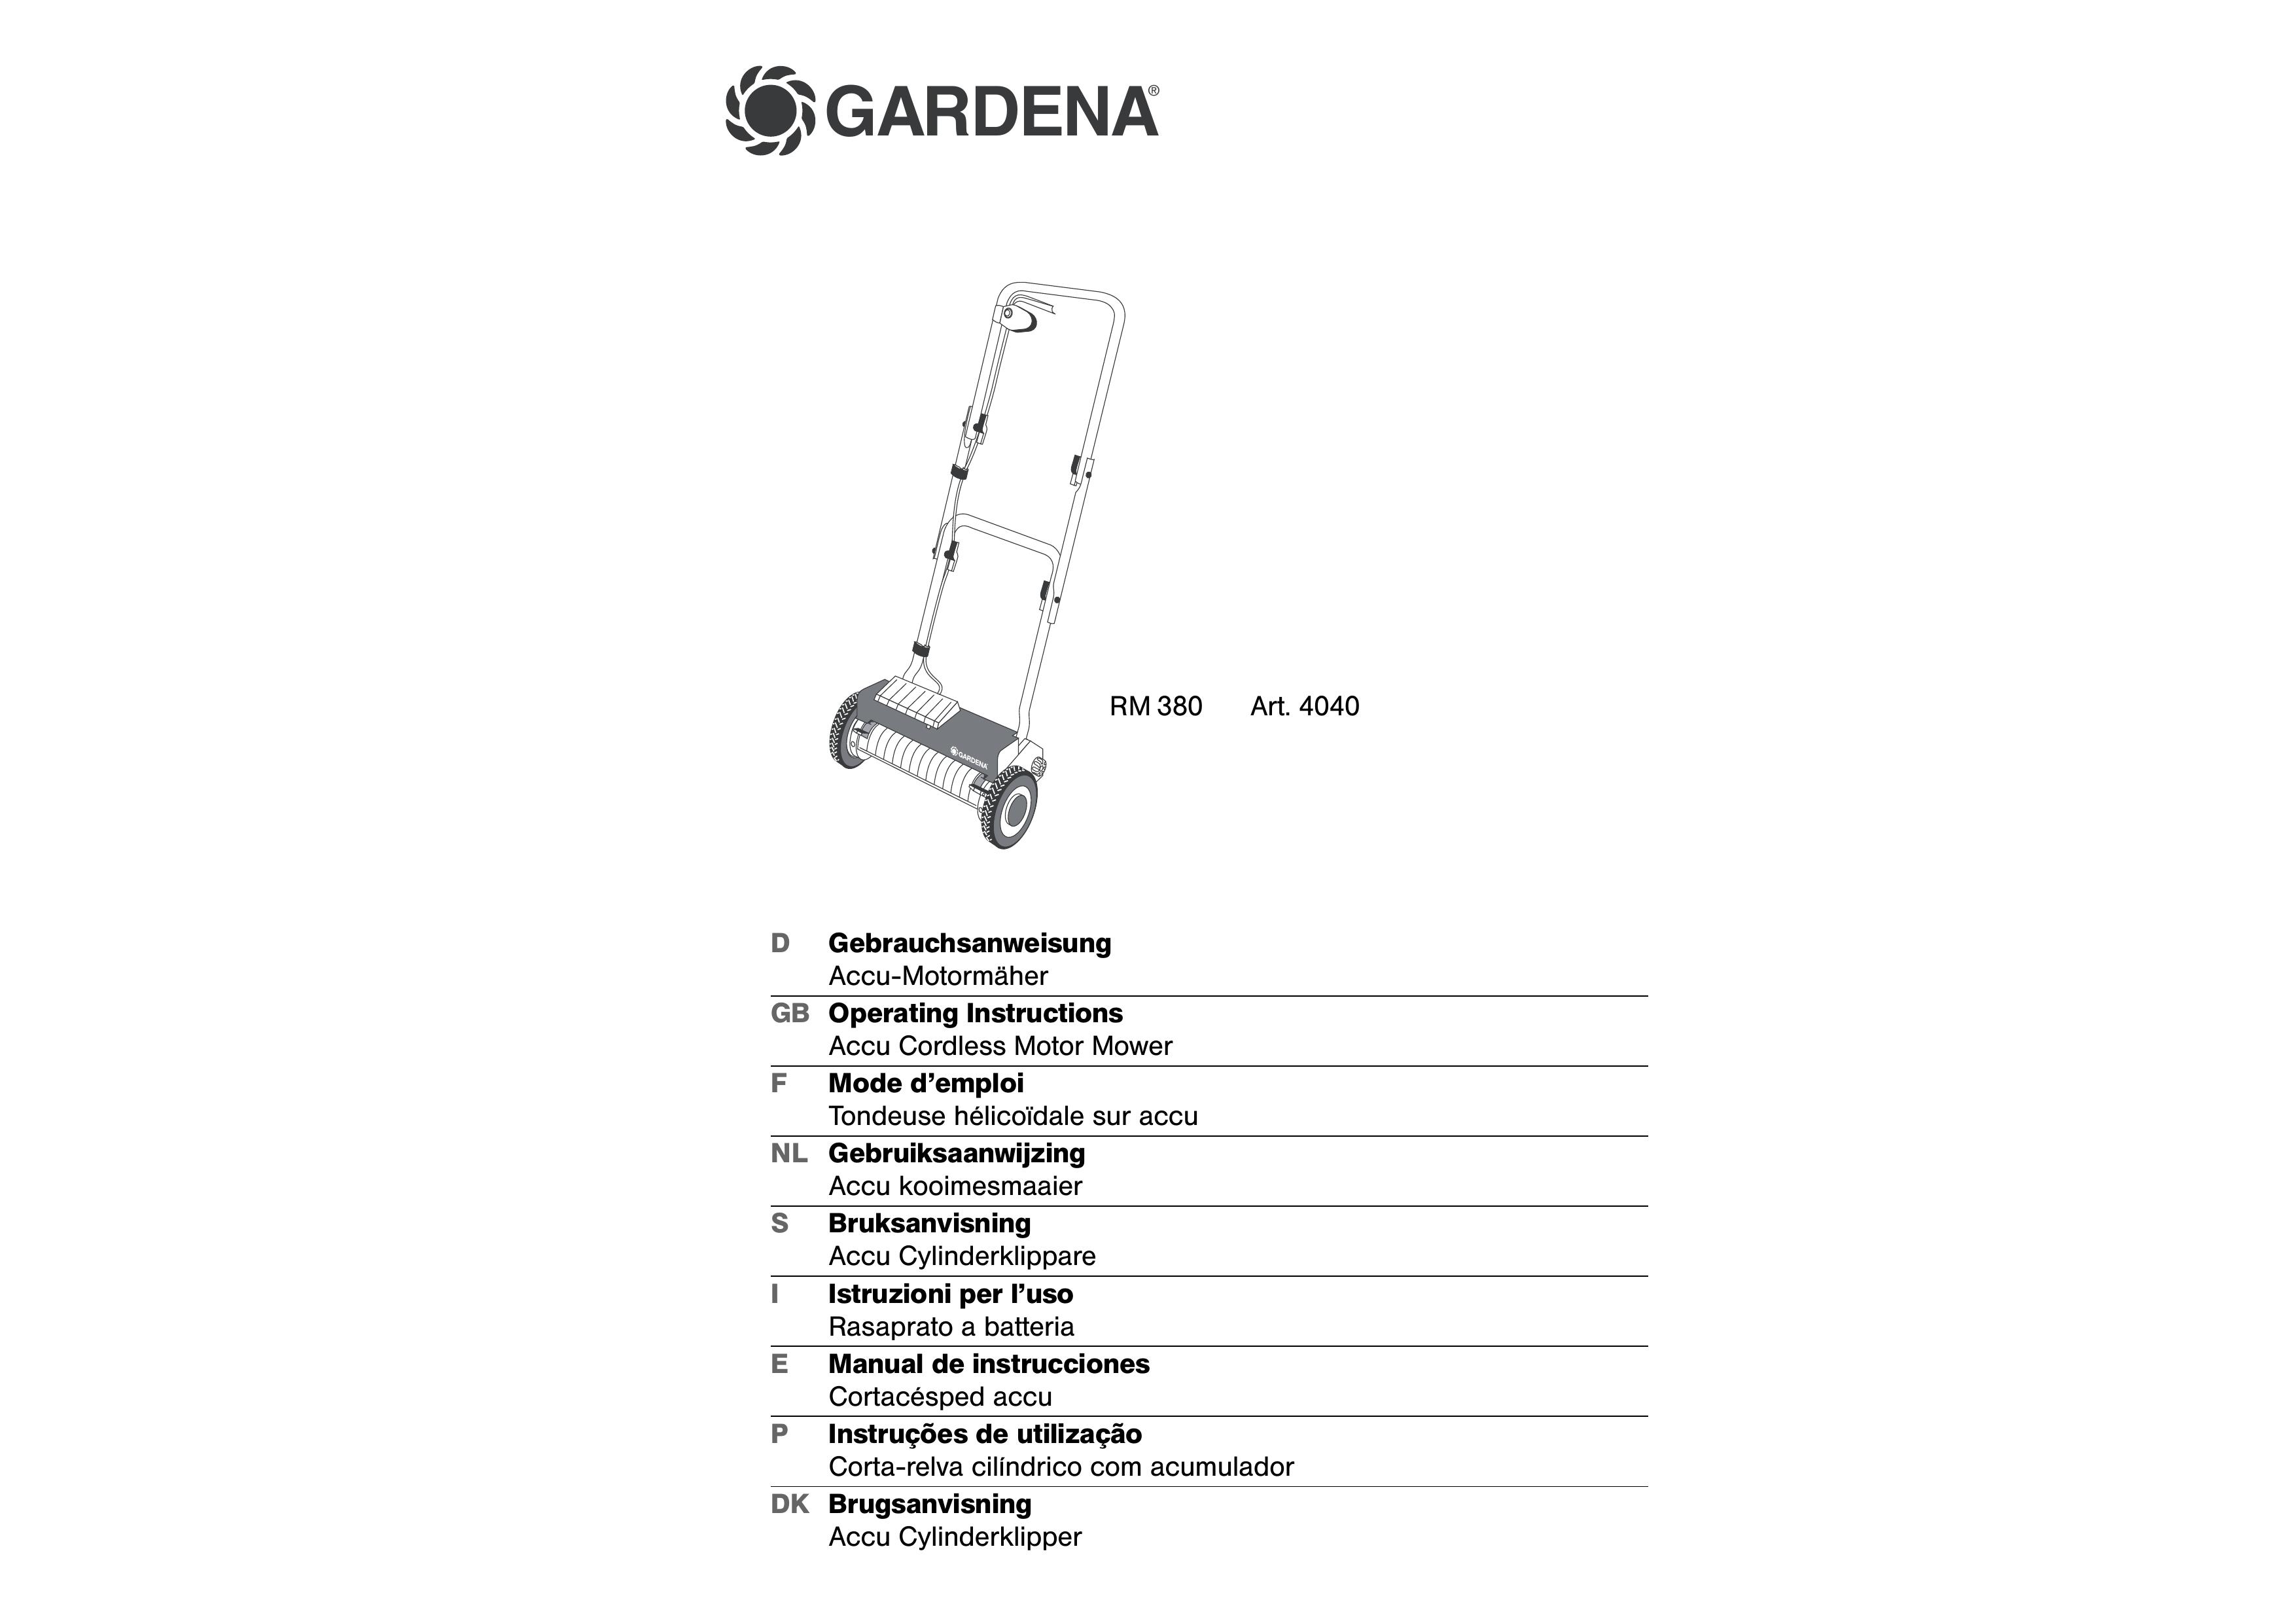 Gardena RM 380 Lawn Mower User Manual